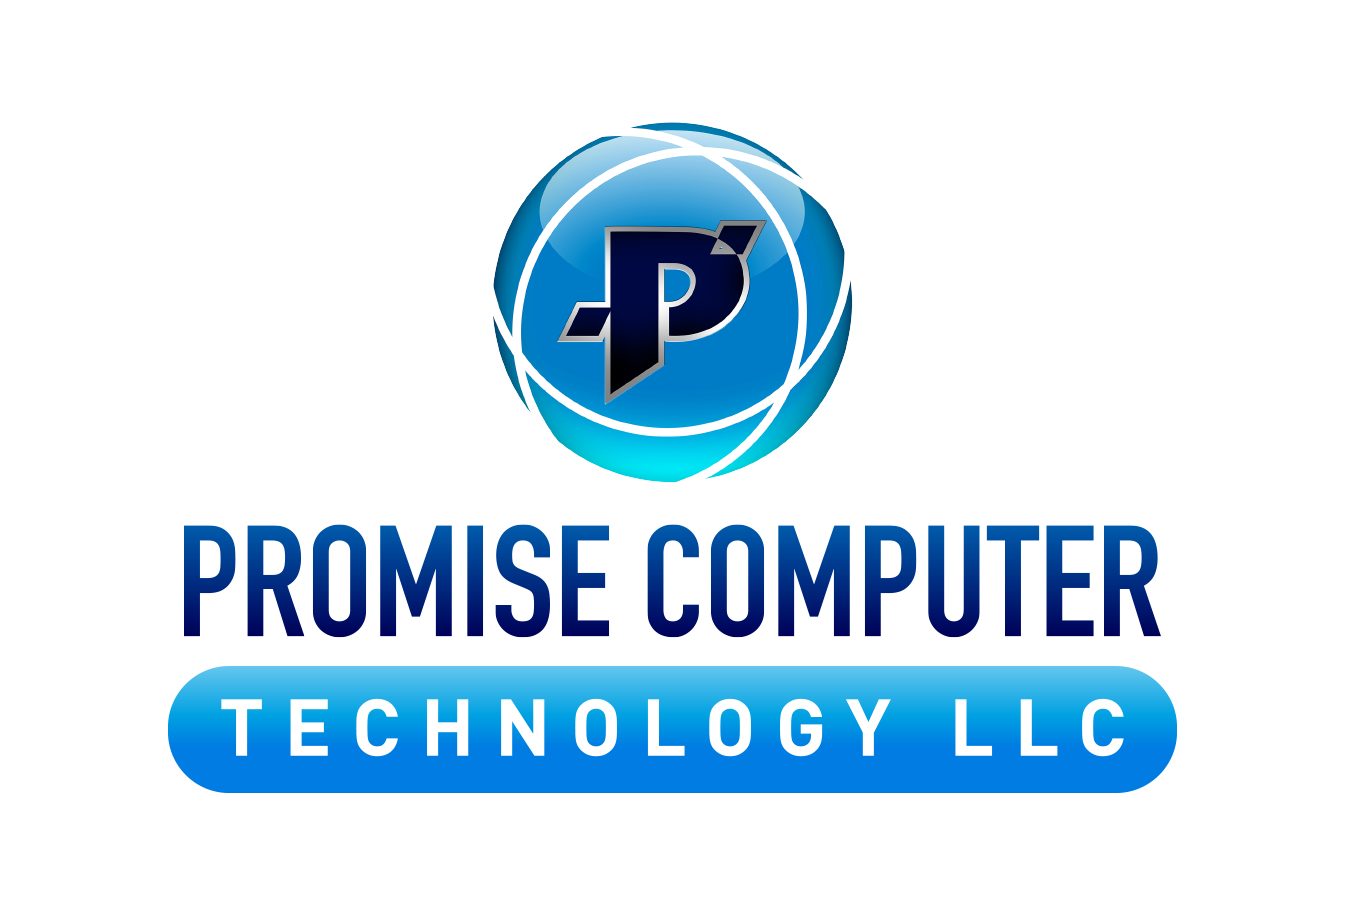 PROMISE COMPUTER TECHNOLOGY LLC